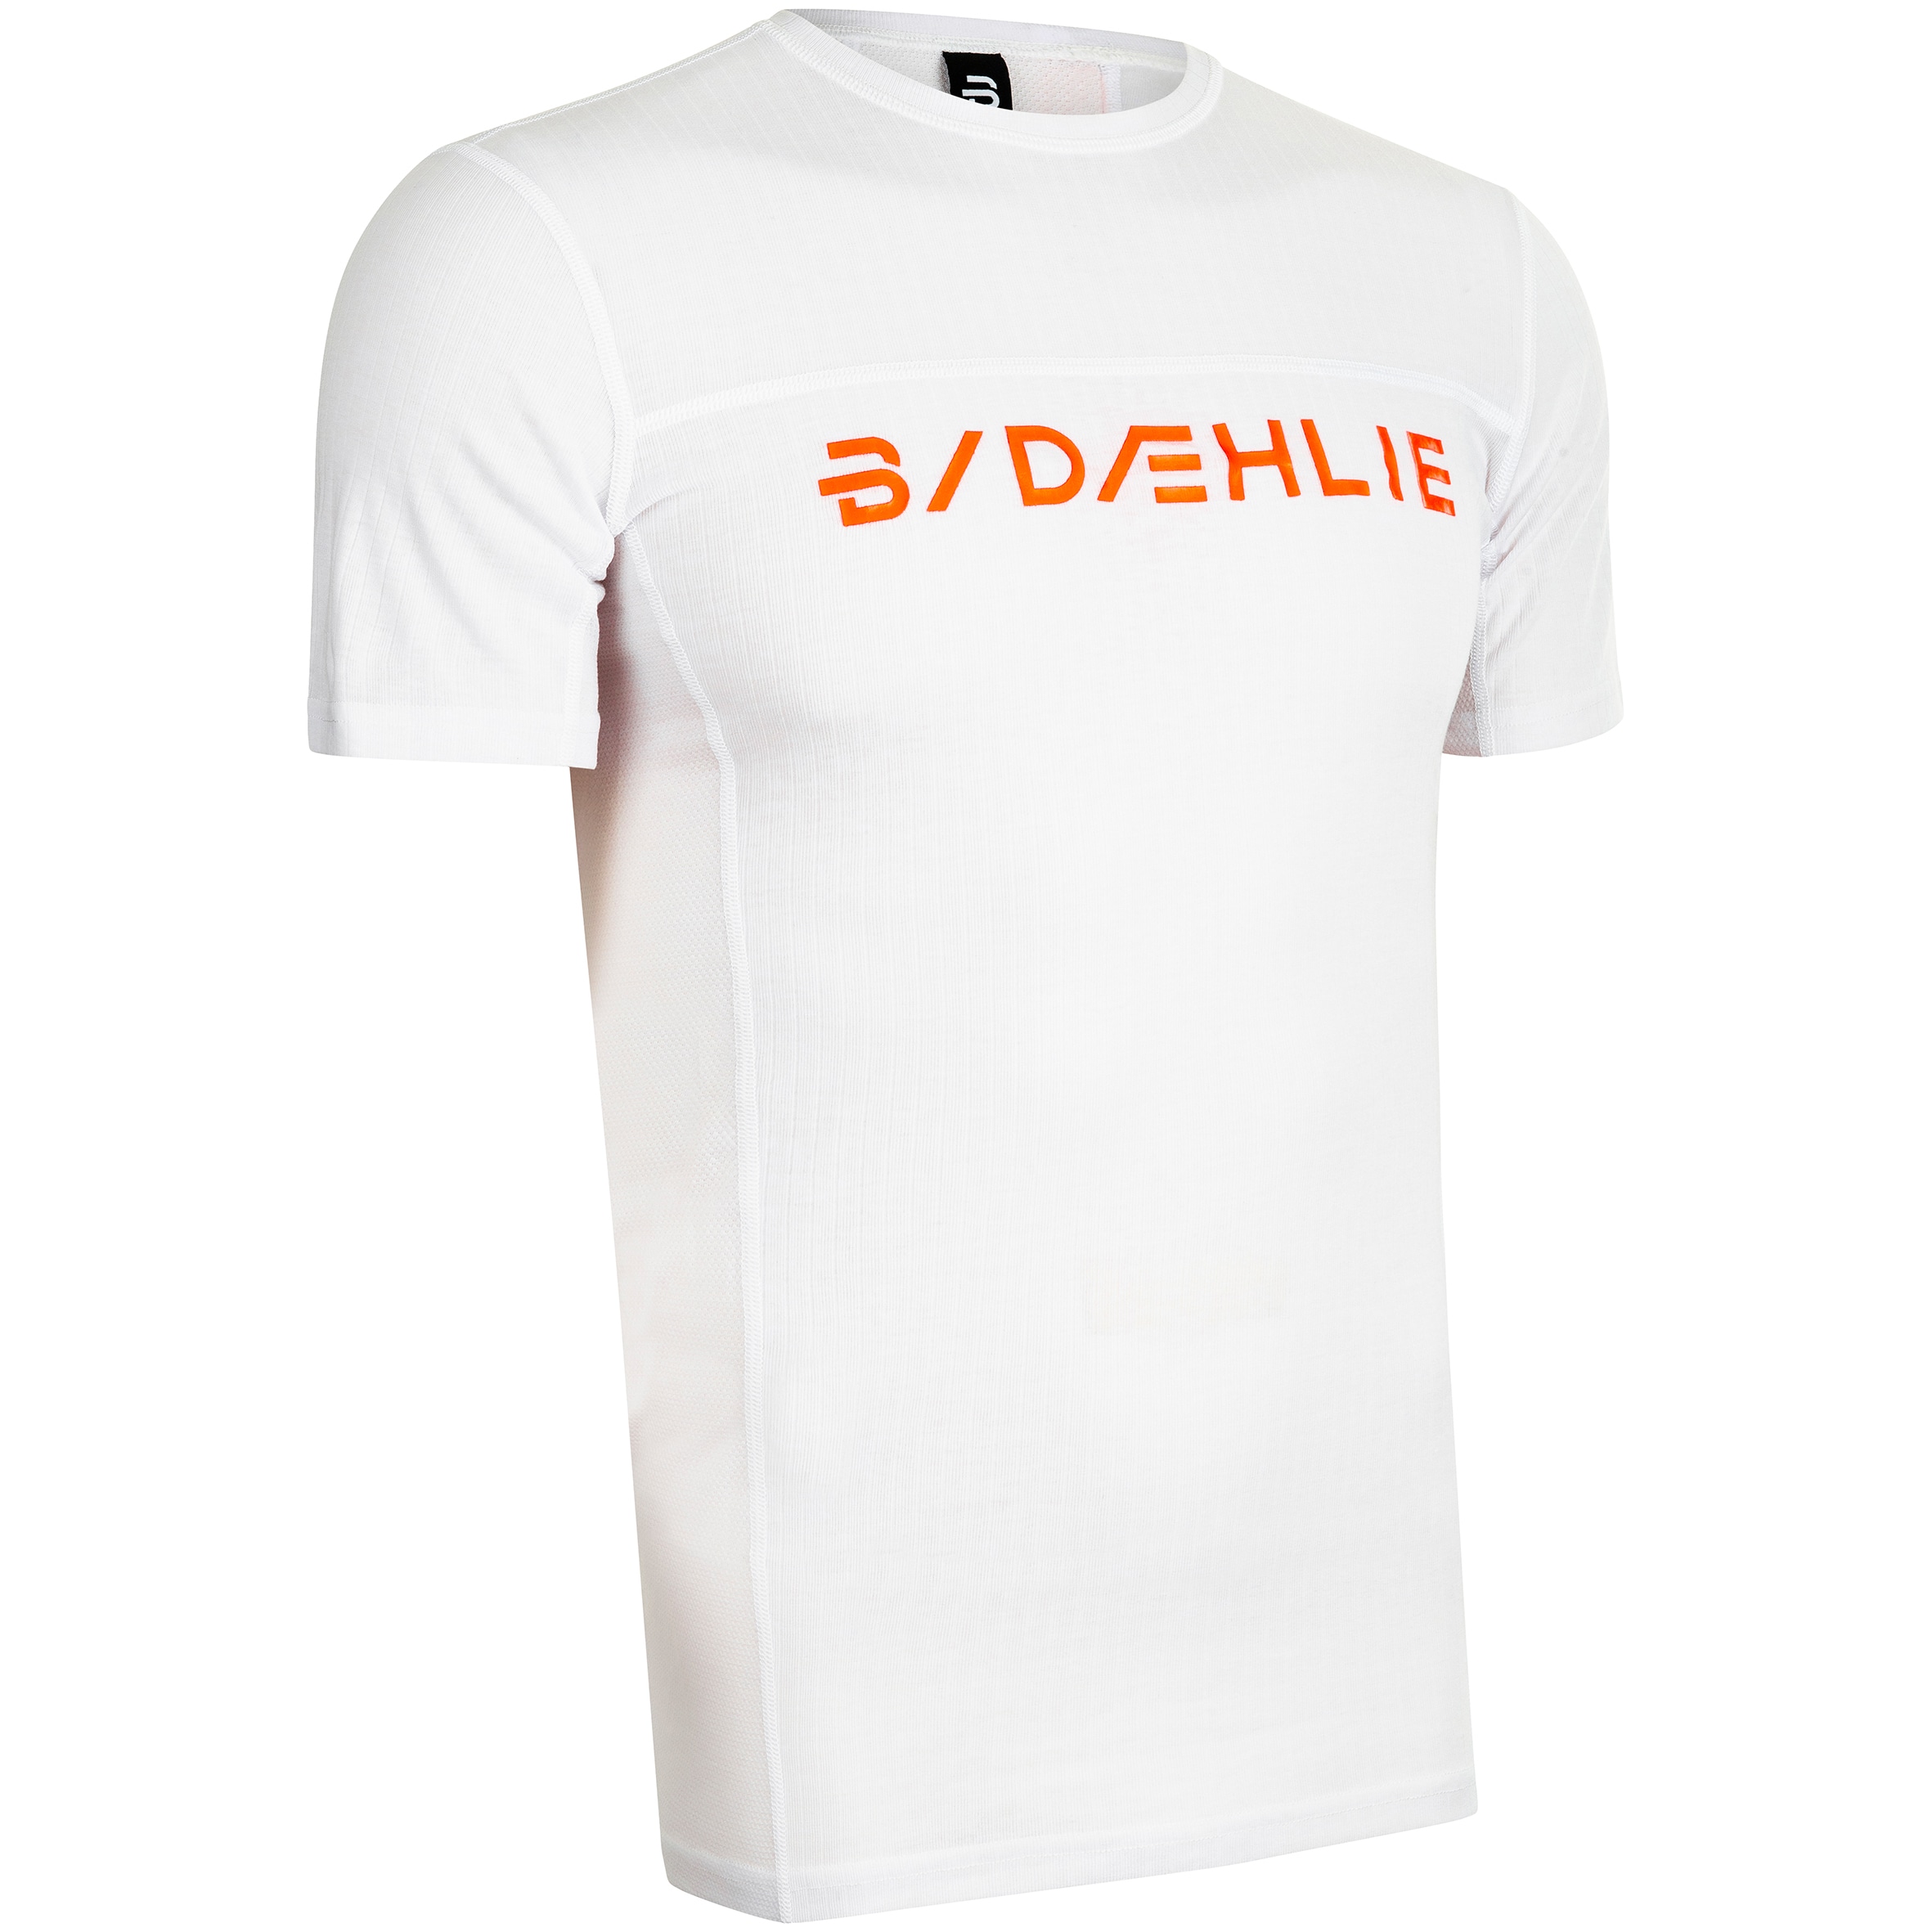 Dæhlie Performance-Tech T-Shirt, herre